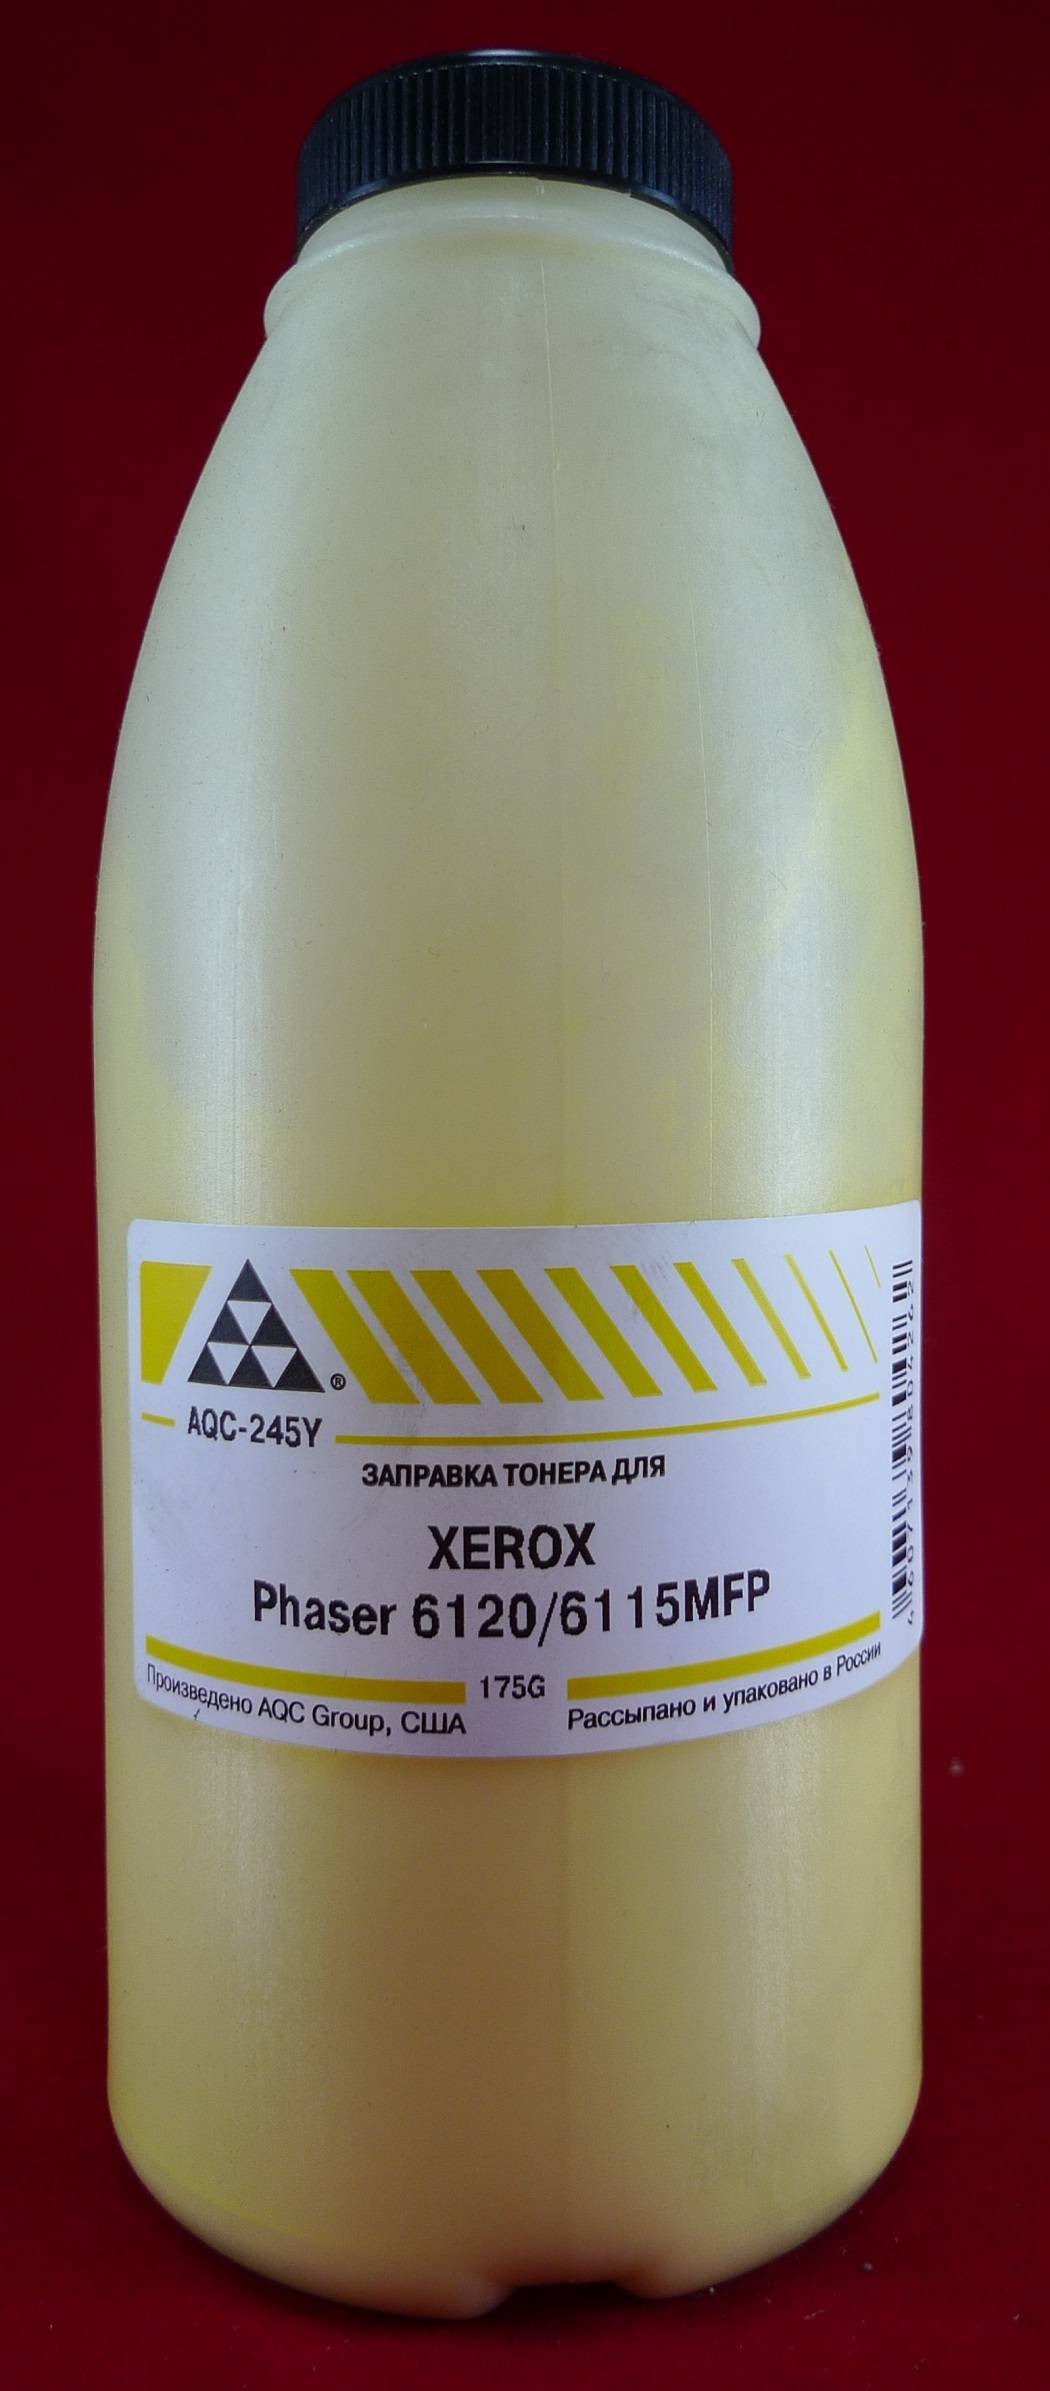 Тонер XEROX Phaser 6120/6115MFP Yellow (фл. 175г) (AQC-США) фас.Россия - купить с доставкой по России